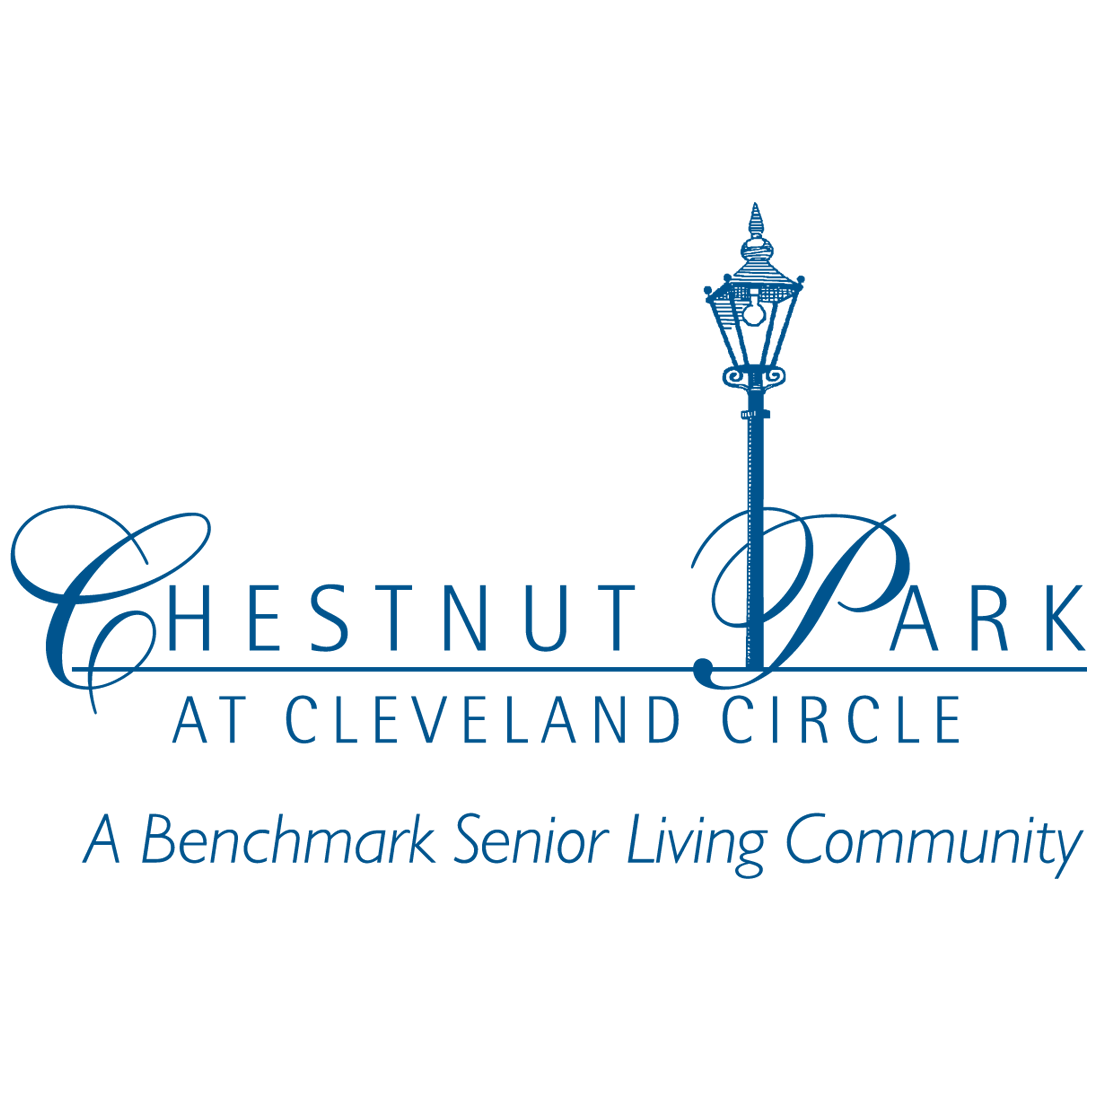 Chestnut Park at Cleveland Circle